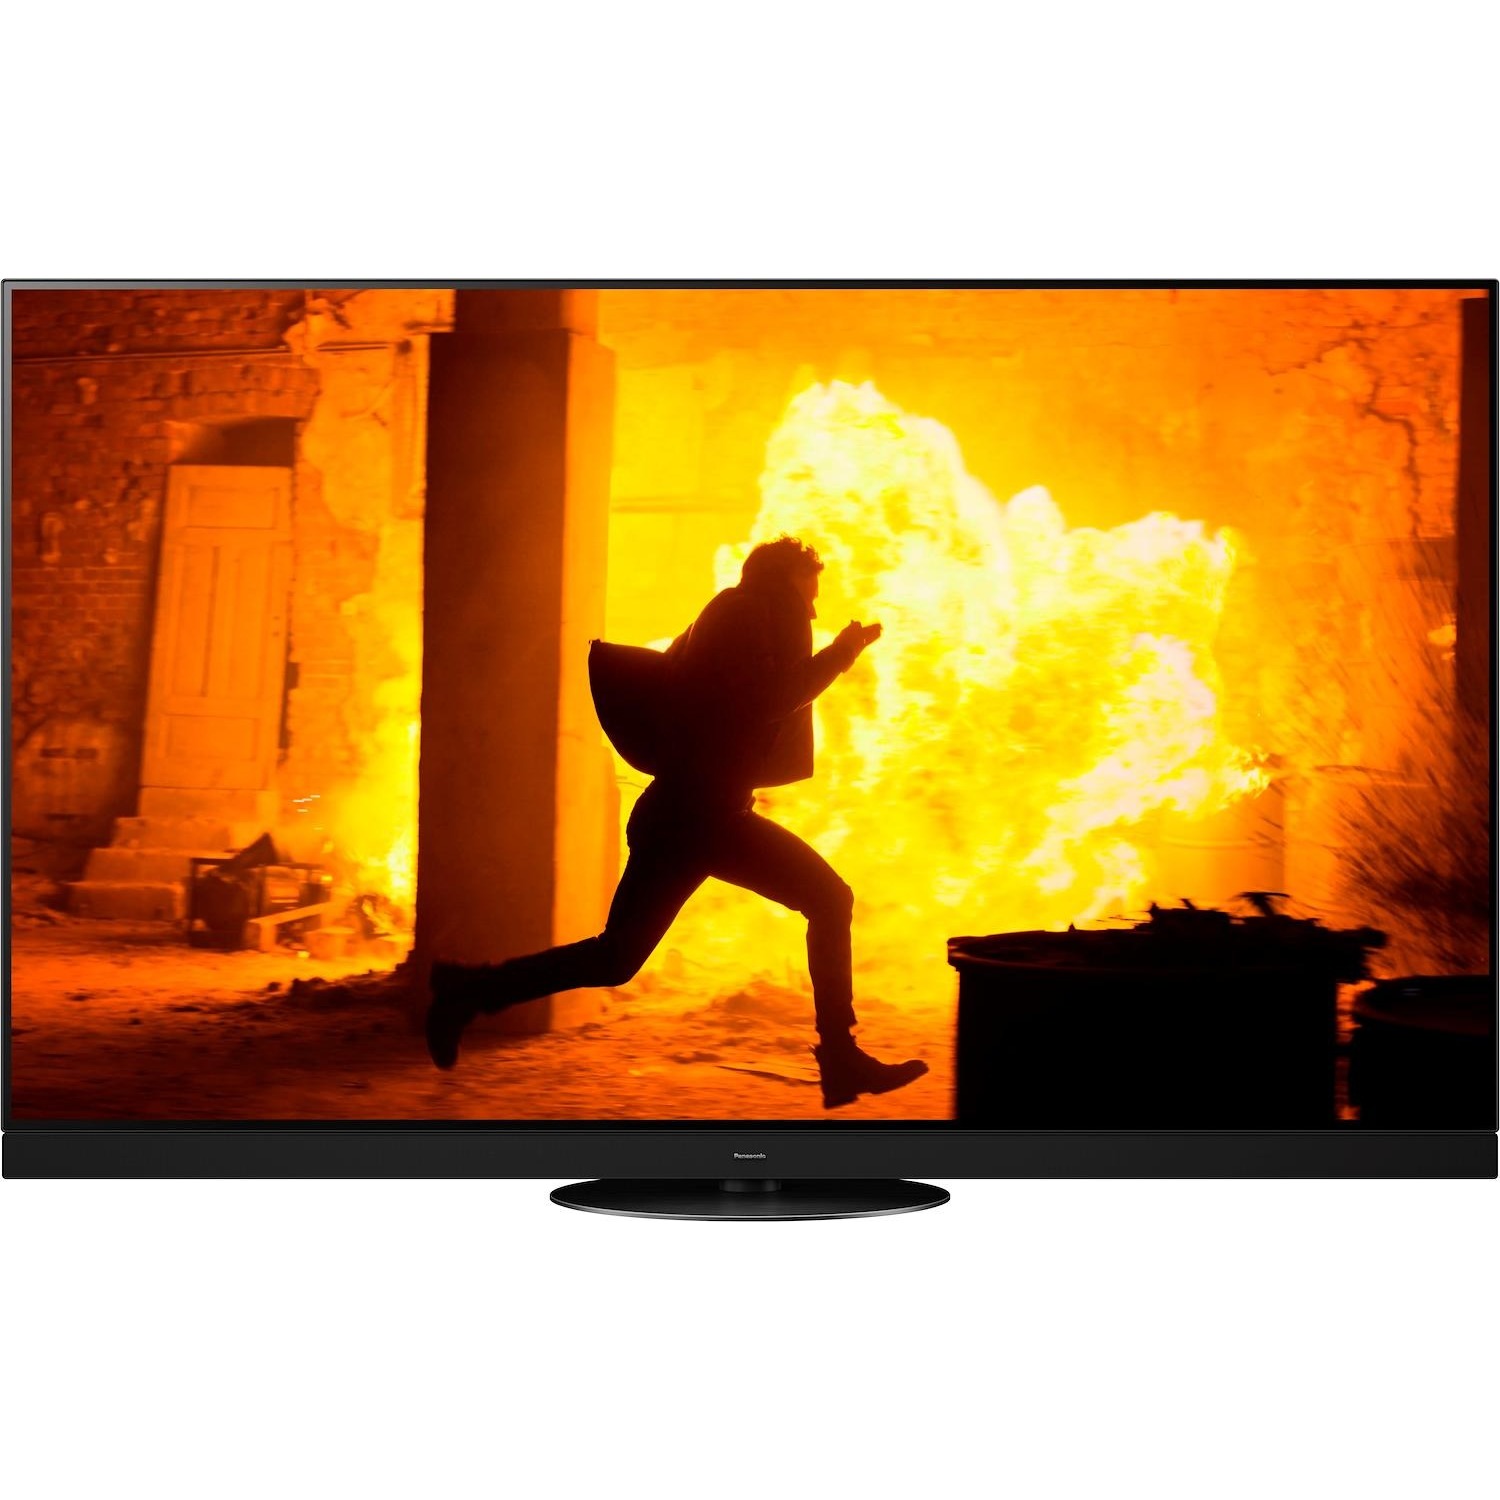 Immagine per TV OLED 4K Smart Panasonic 55HZ1500 da DIMOStore